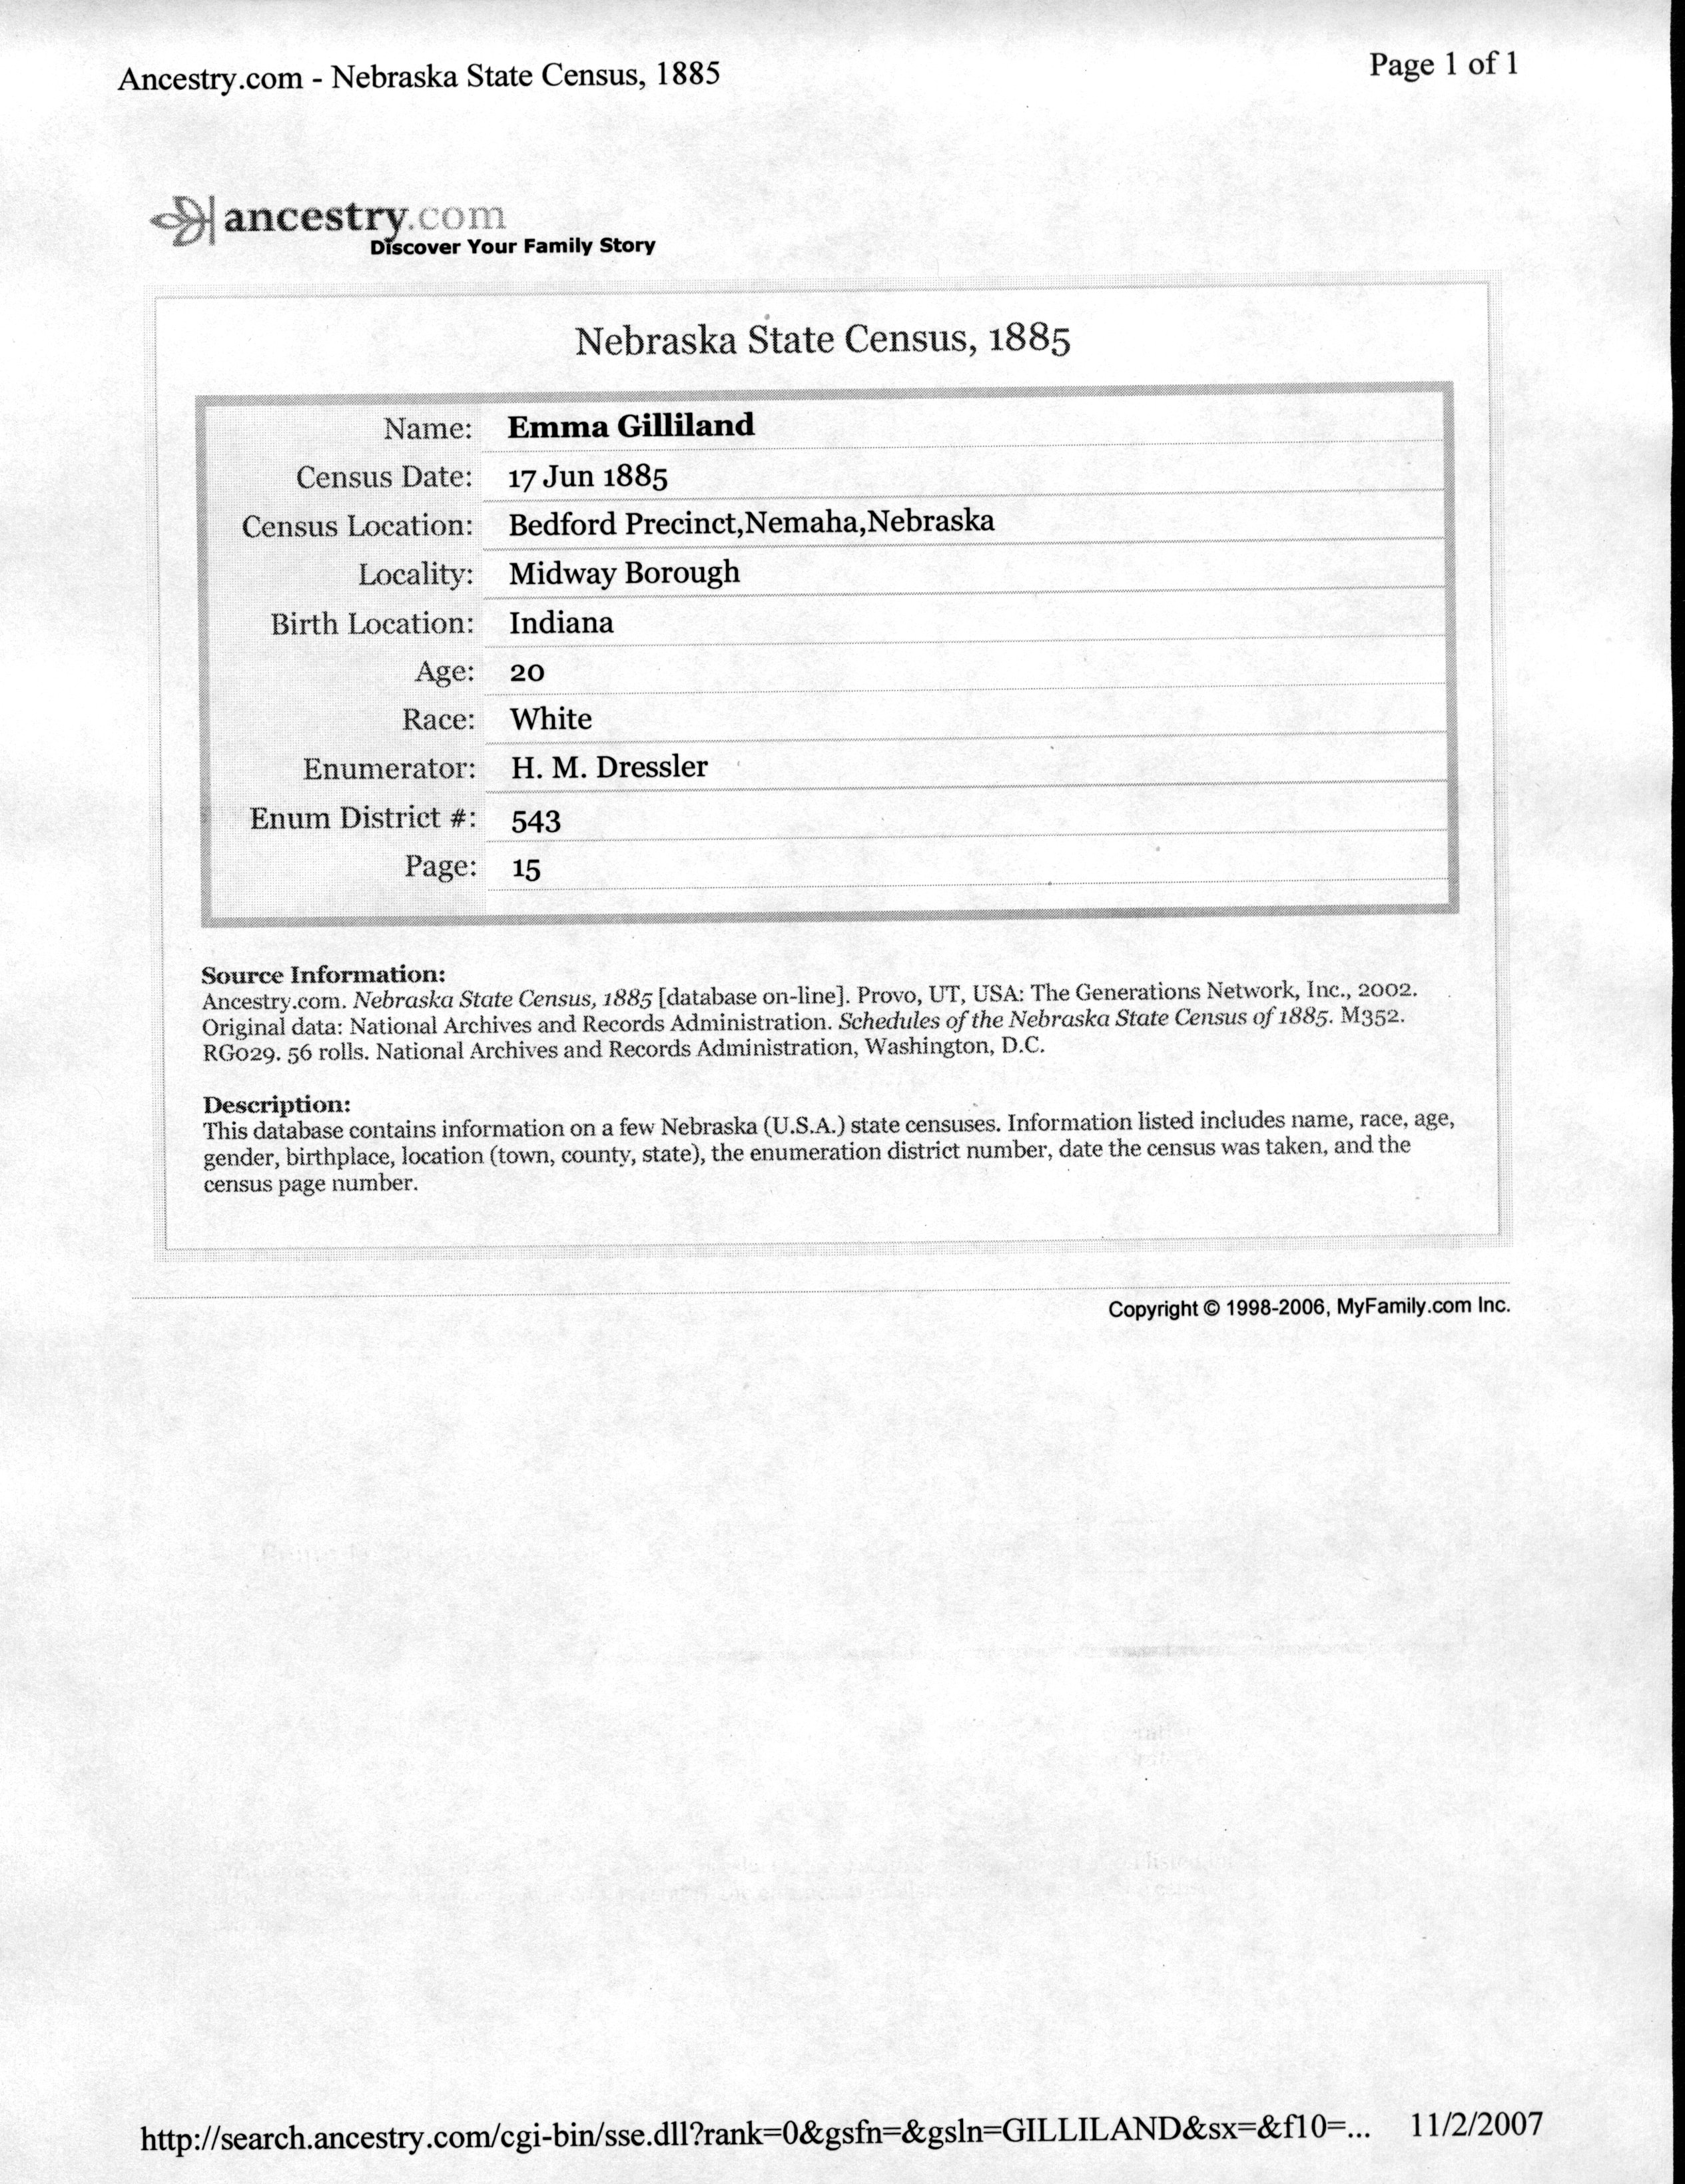 1885 Nebraska State Census - Emma Gilliland.jpg